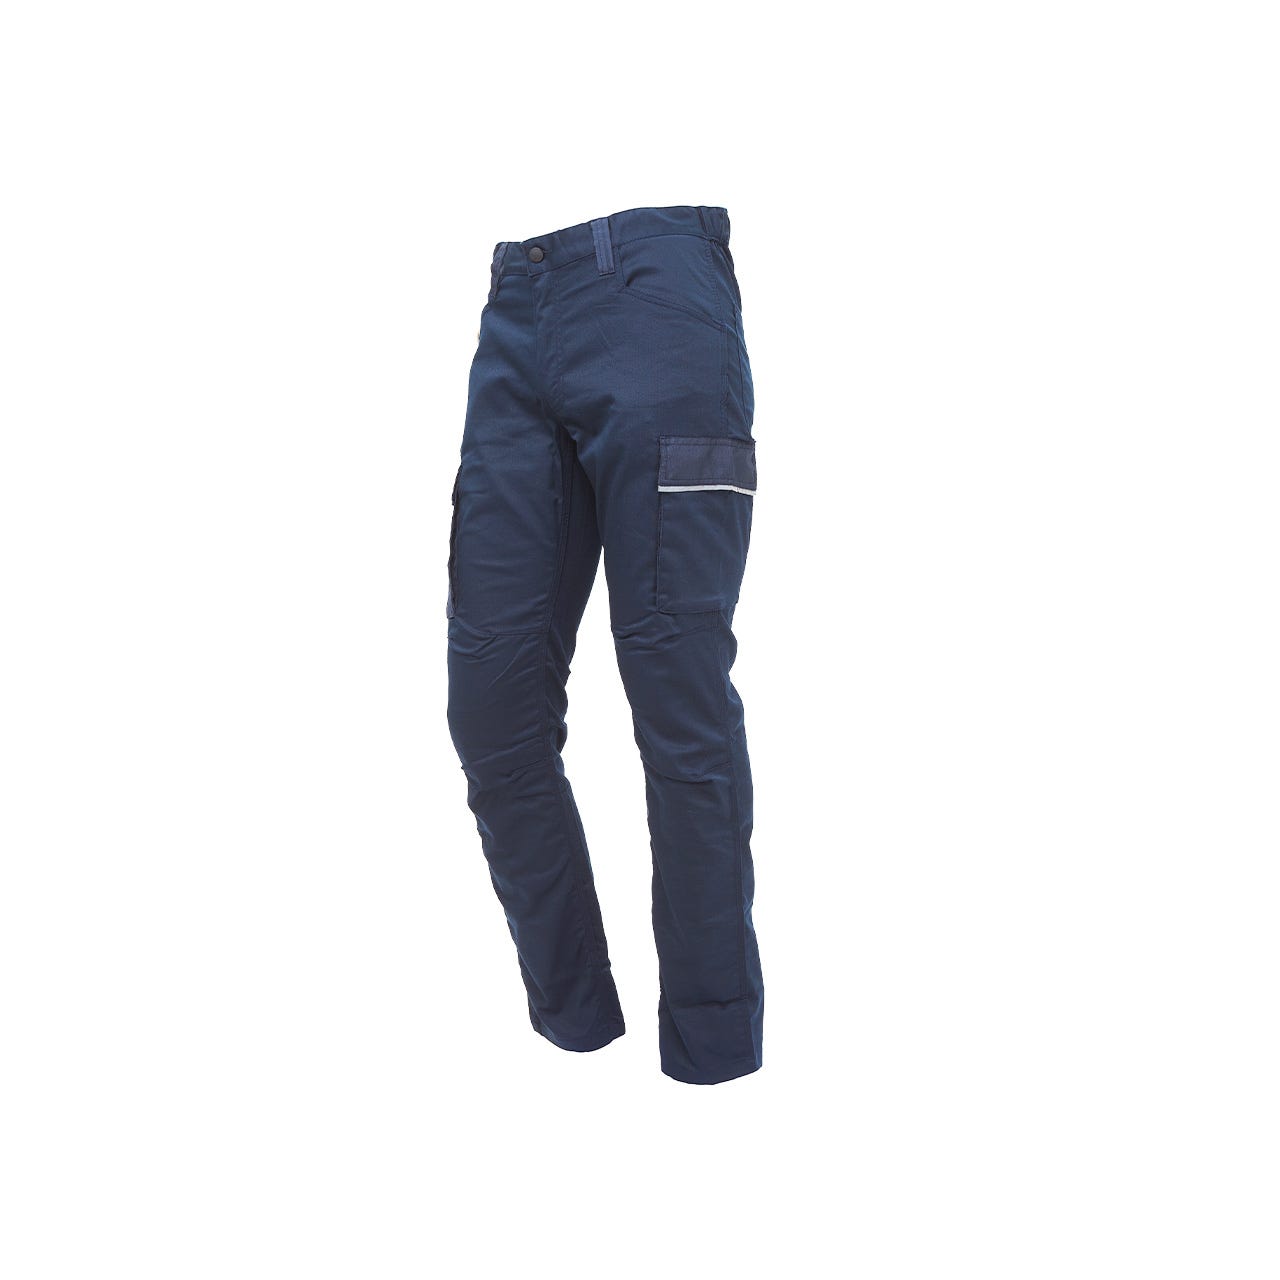 U-Power - Pantalon de travail bleu foncé Stretch et Slim CRAZY - Bleu Foncé - M 2